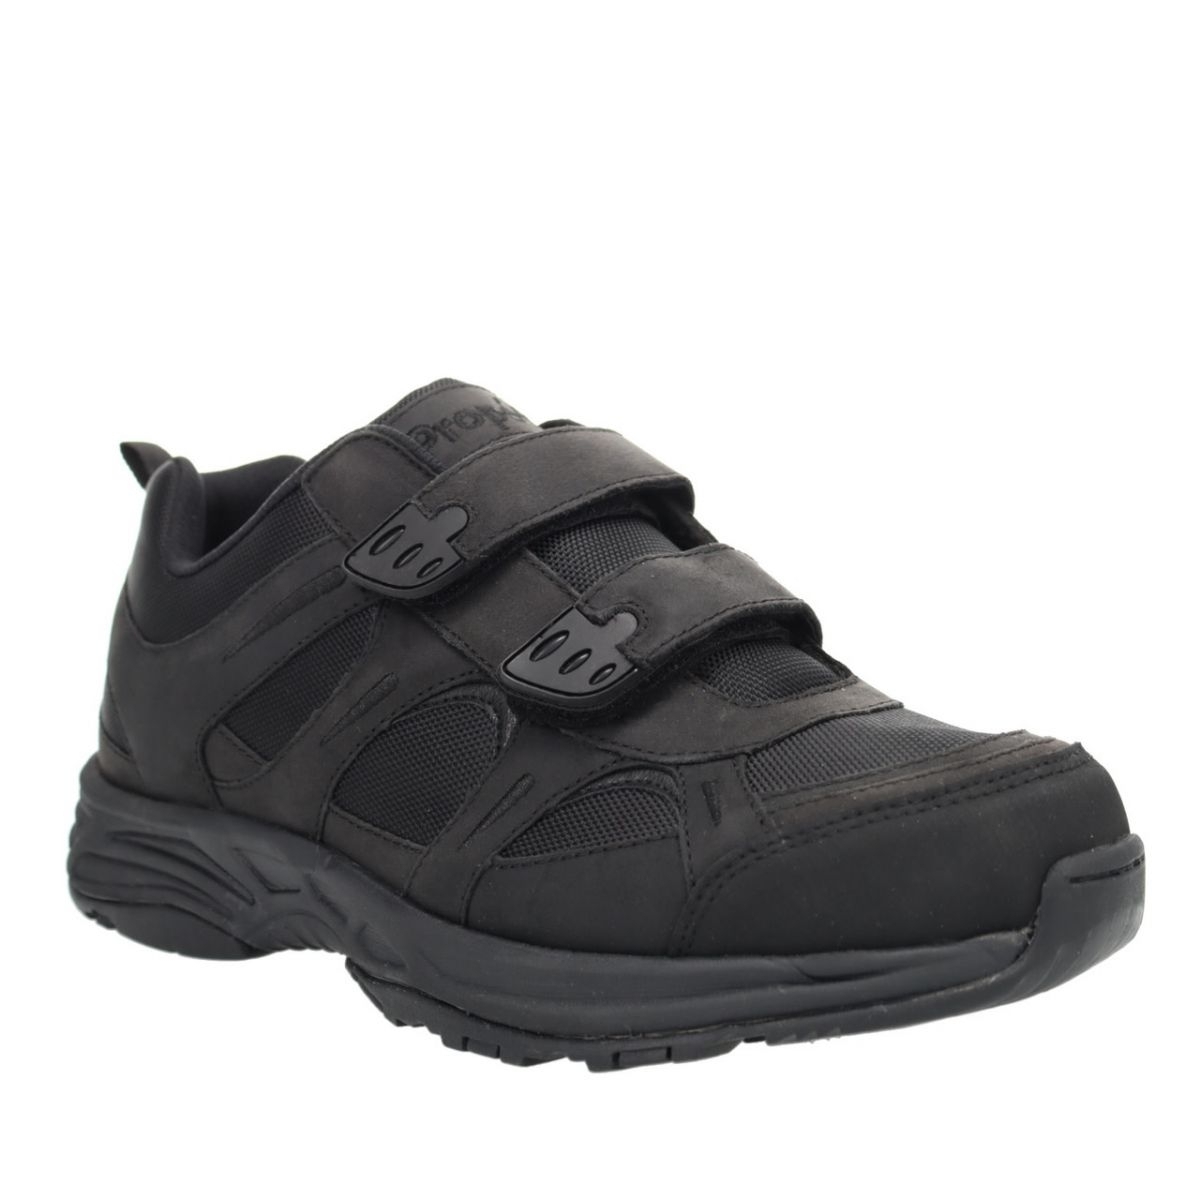 Propet Men's Connelly Strap Walking Shoe All Black - M5502ABL ALL BLACK - ALL BLACK, 13 X-Wide